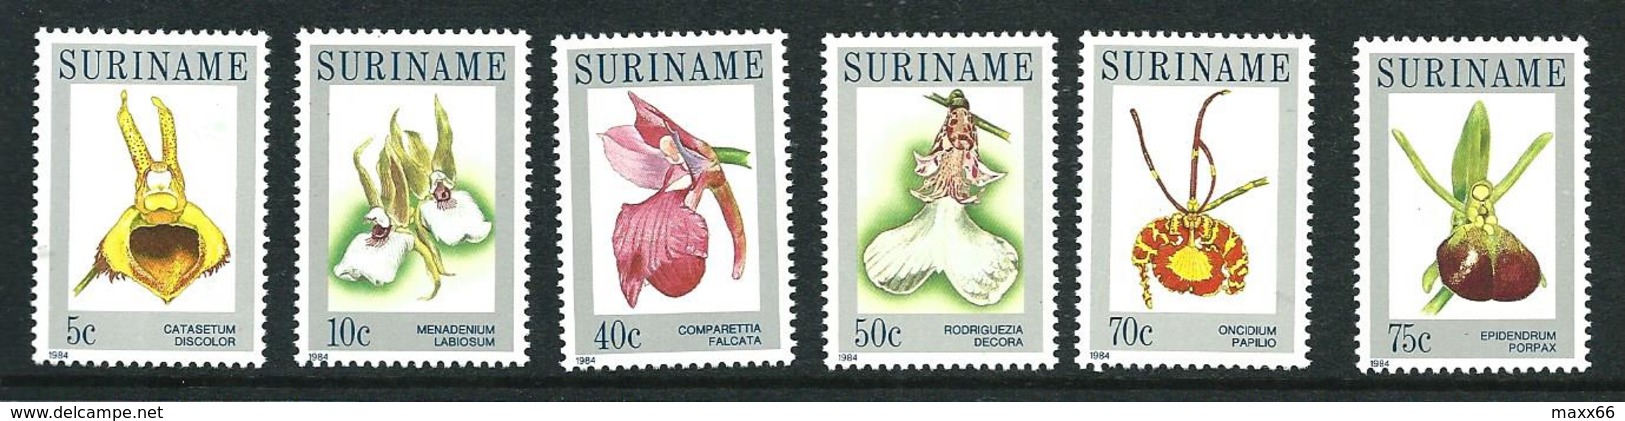 SURINAME MNH - 1984 Orchids - Vari Cent - Michel SR 1065 1070 - Surinam